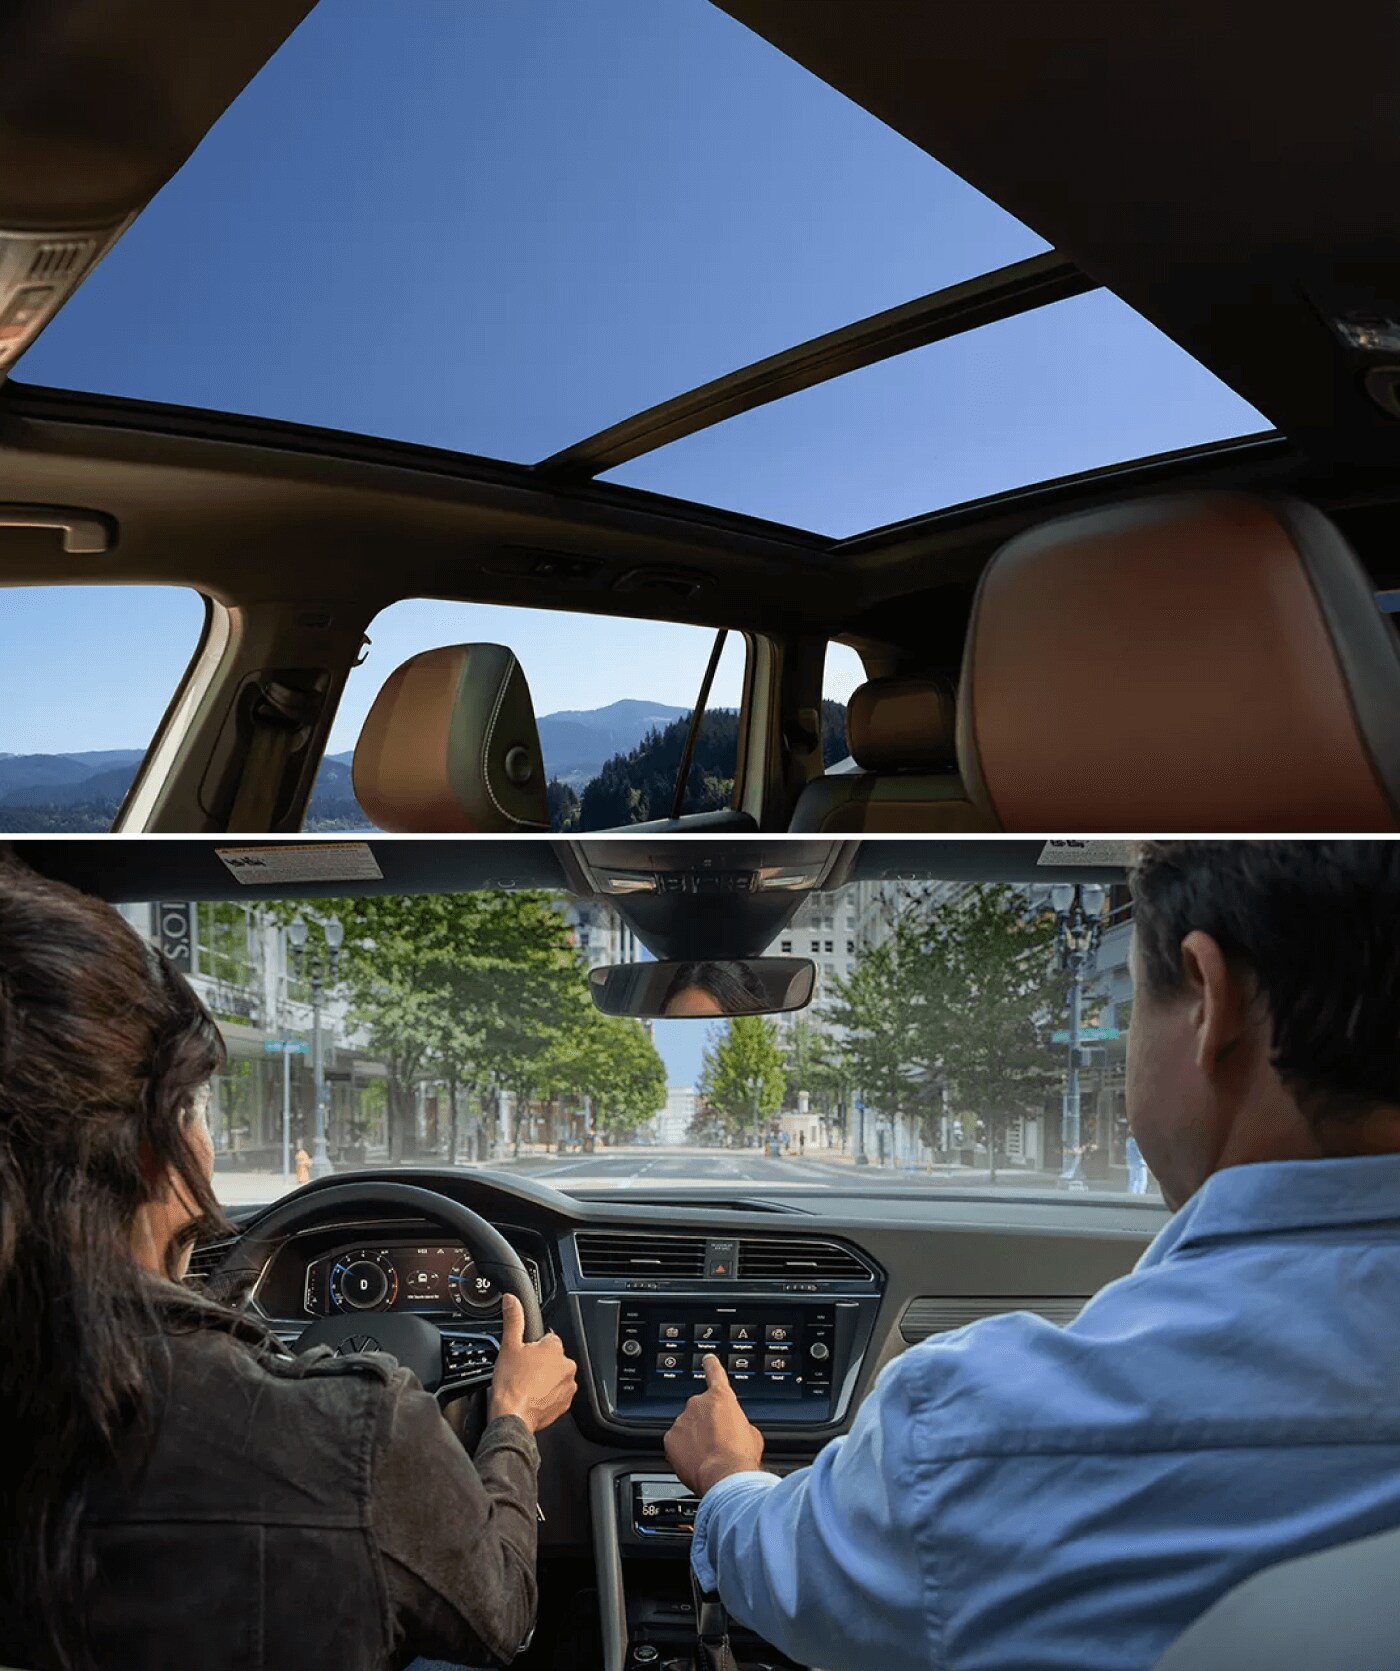 VW Tiguan Vs. Mazda CX-5: Interior Features and Seating Capacity